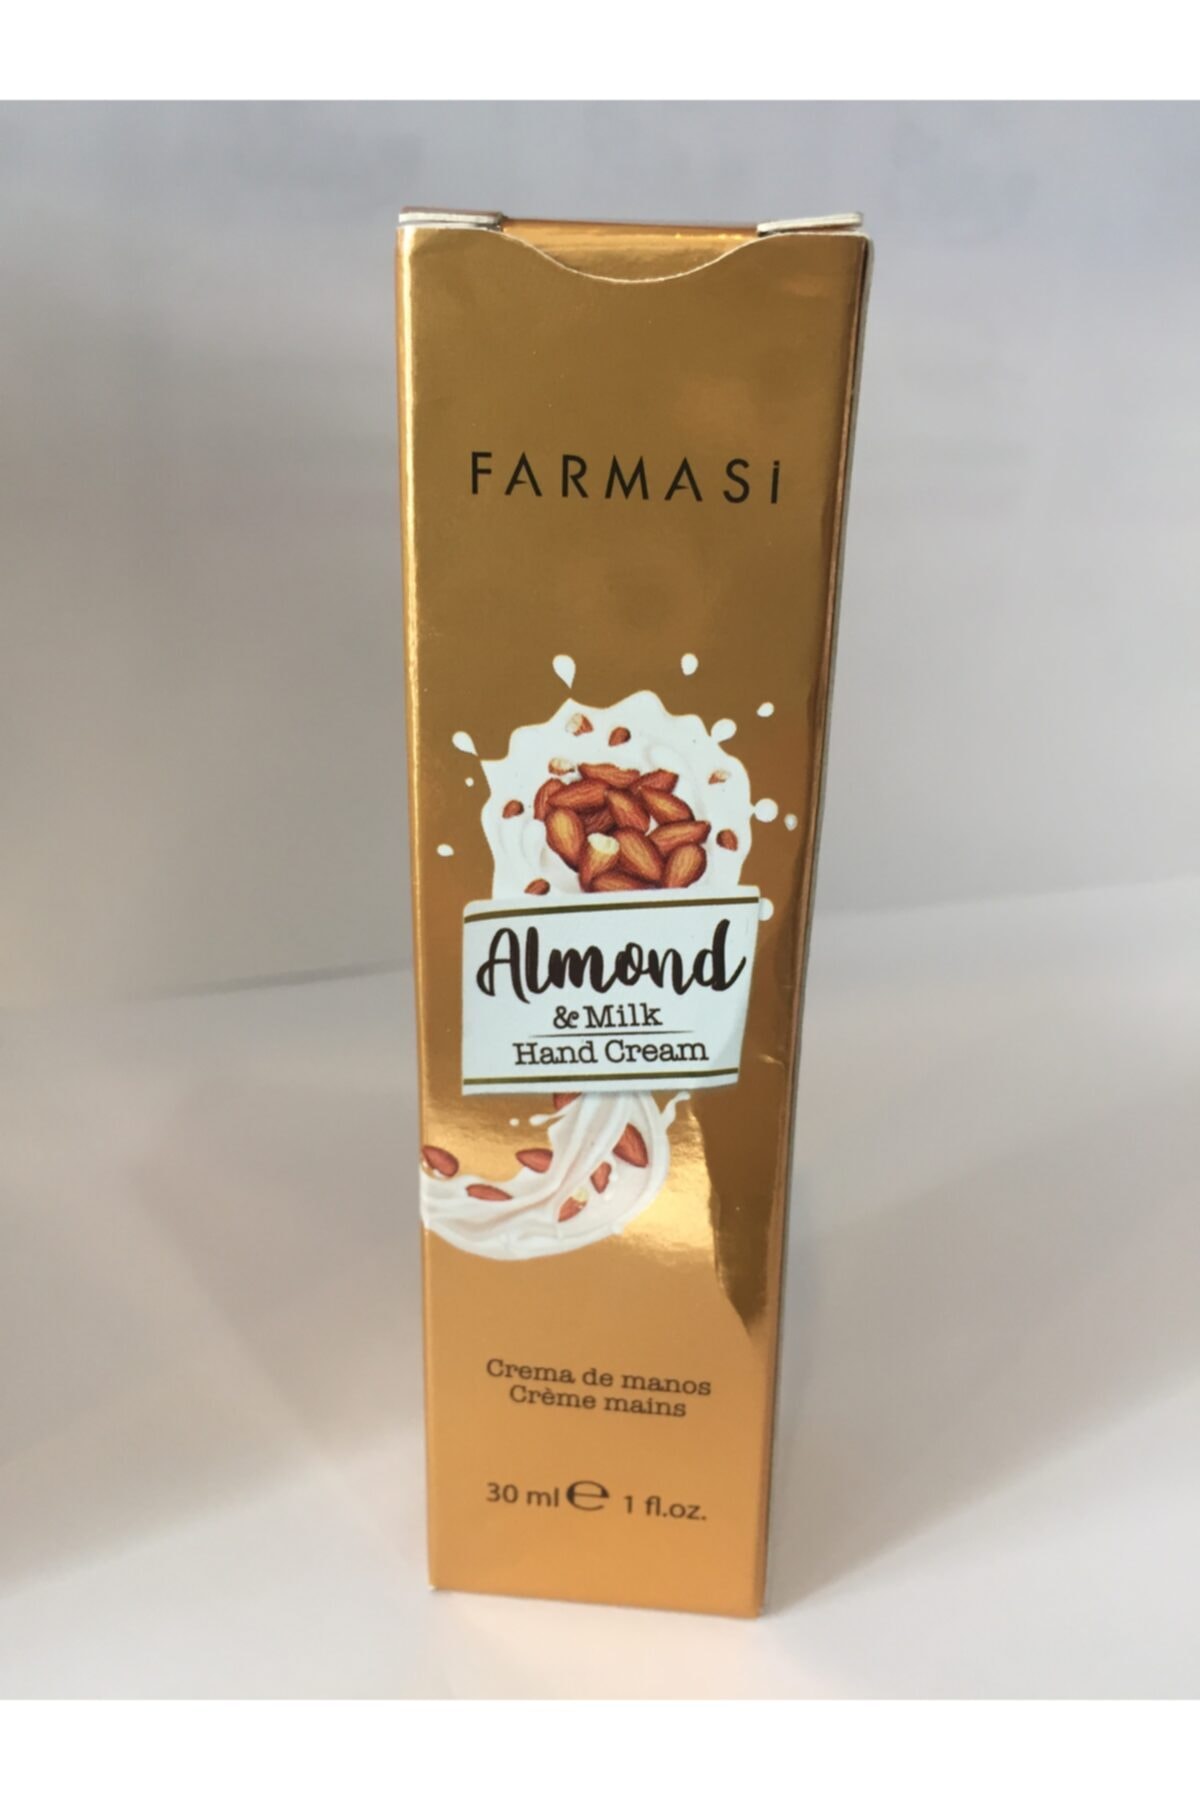 Farmasi Almond & Milk Hand Cream